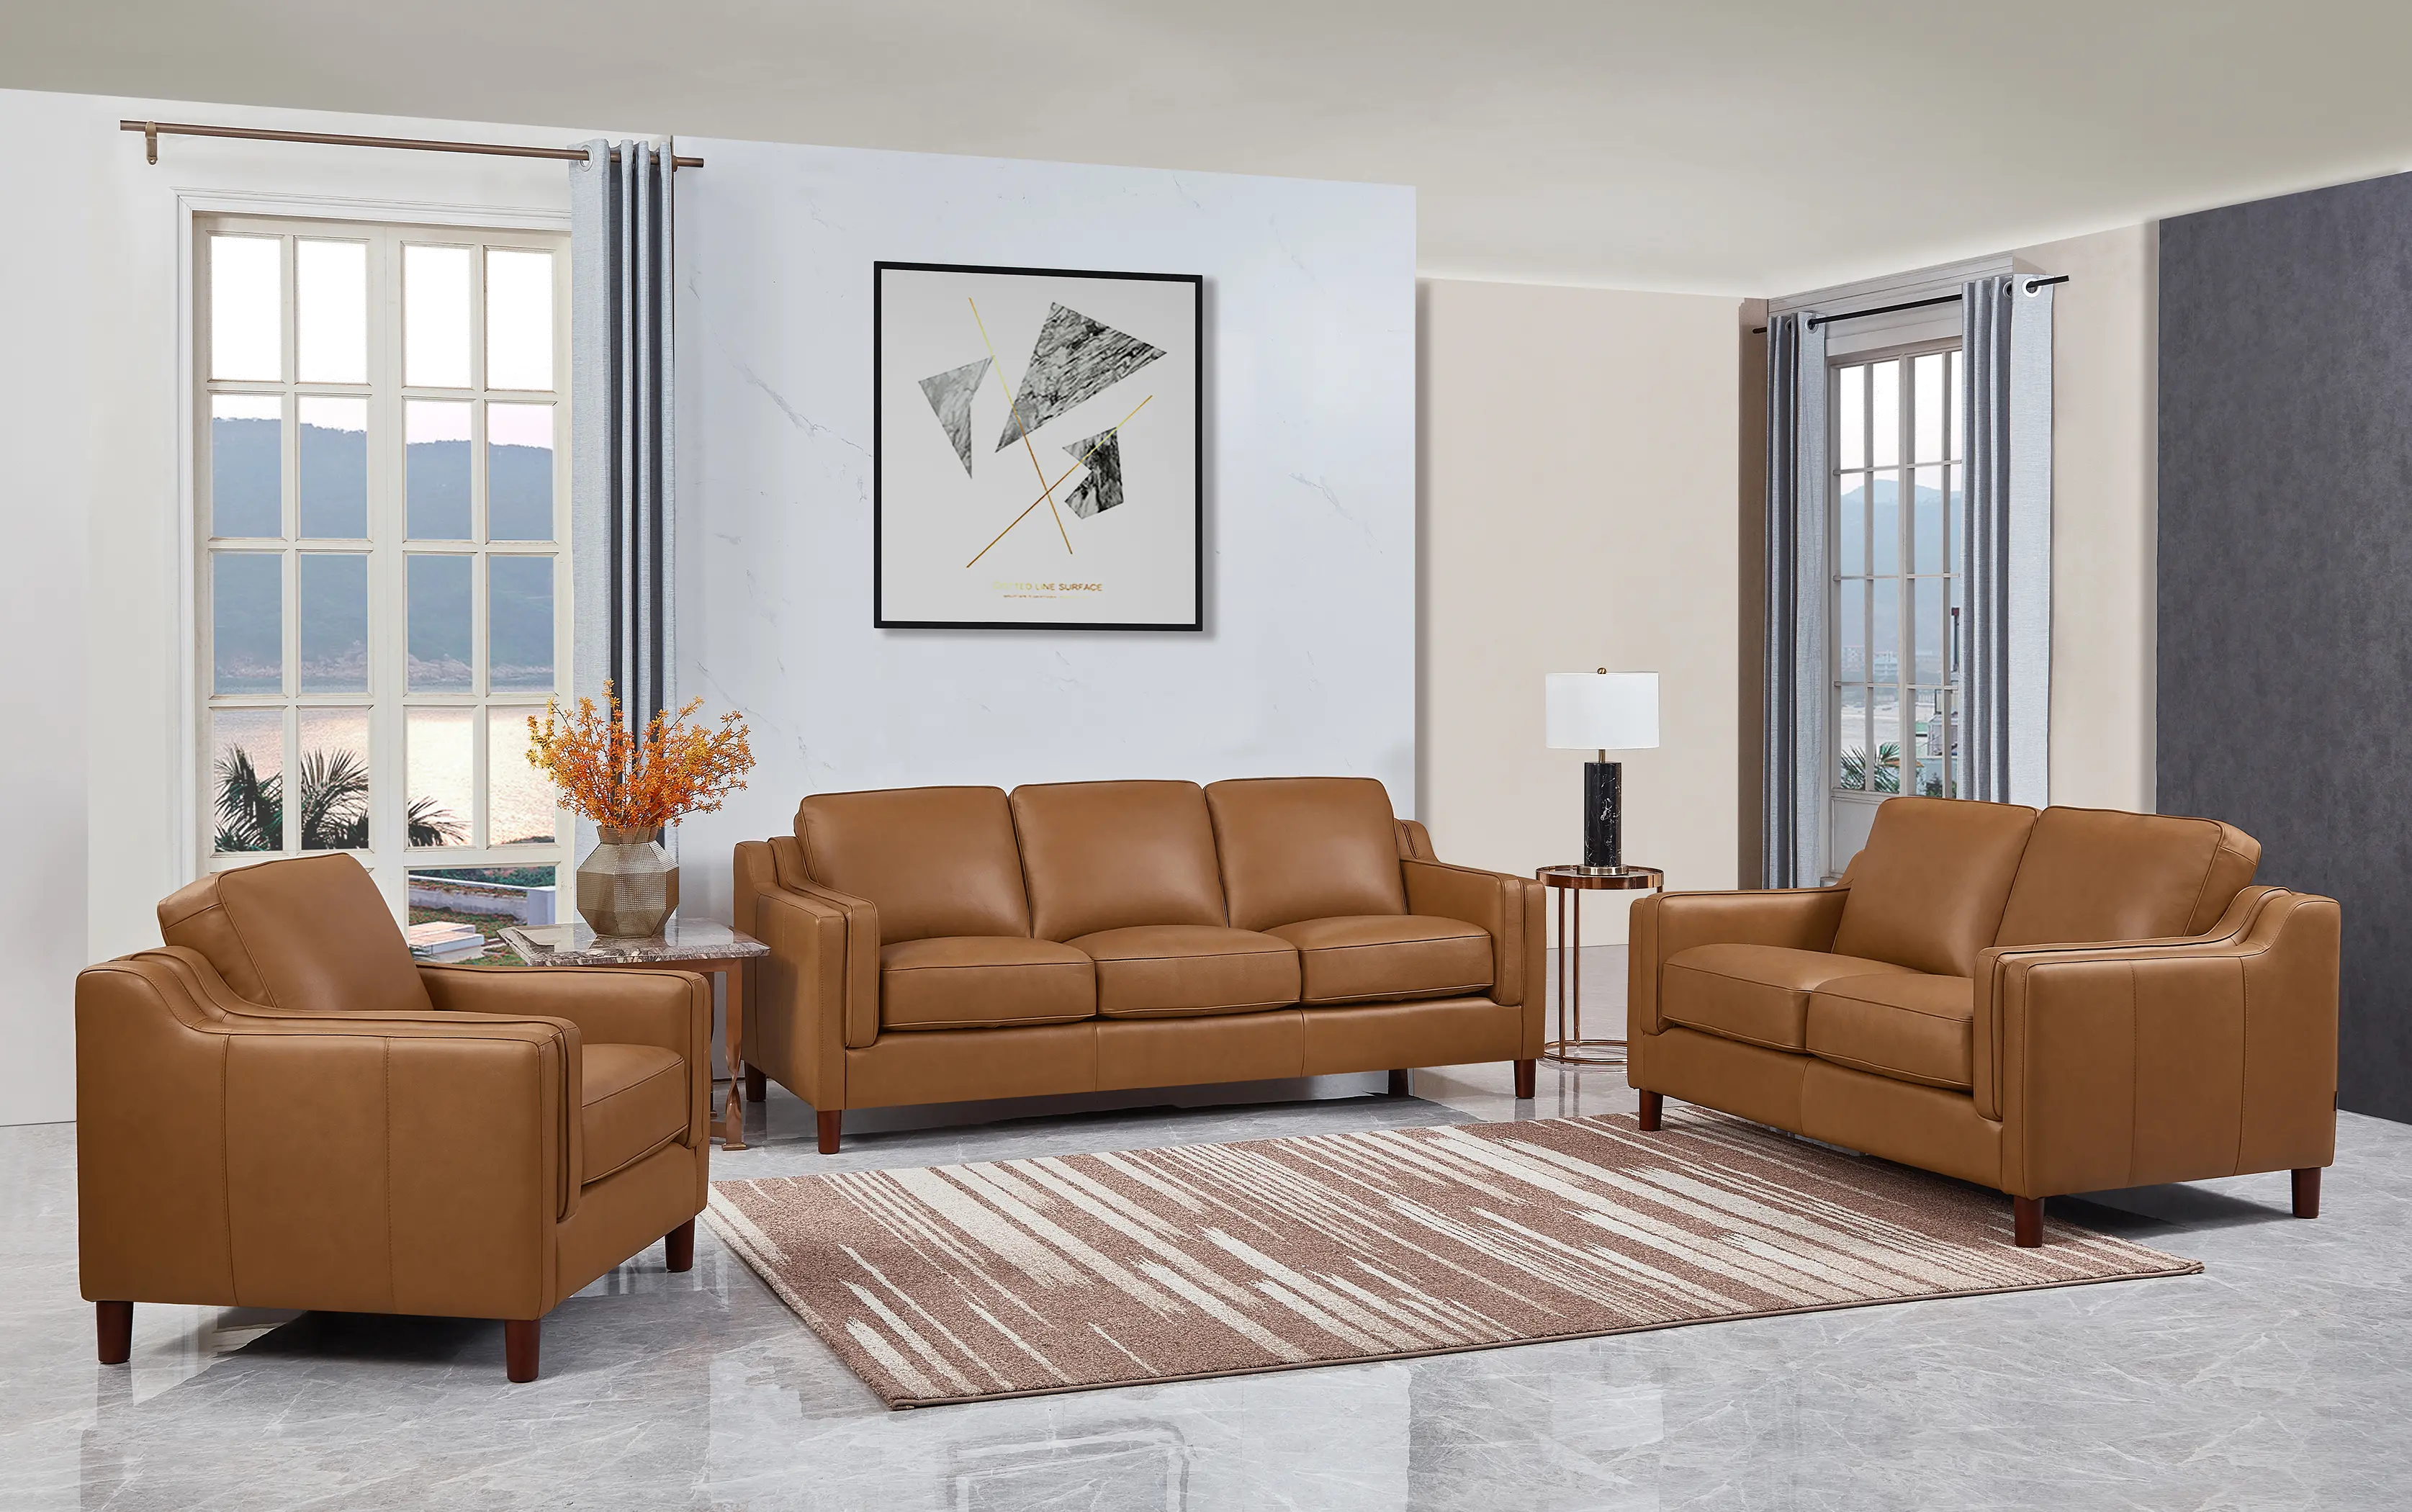 Ballari Cognac Brown Leather 3 Piece Living Room Set with Loveseat